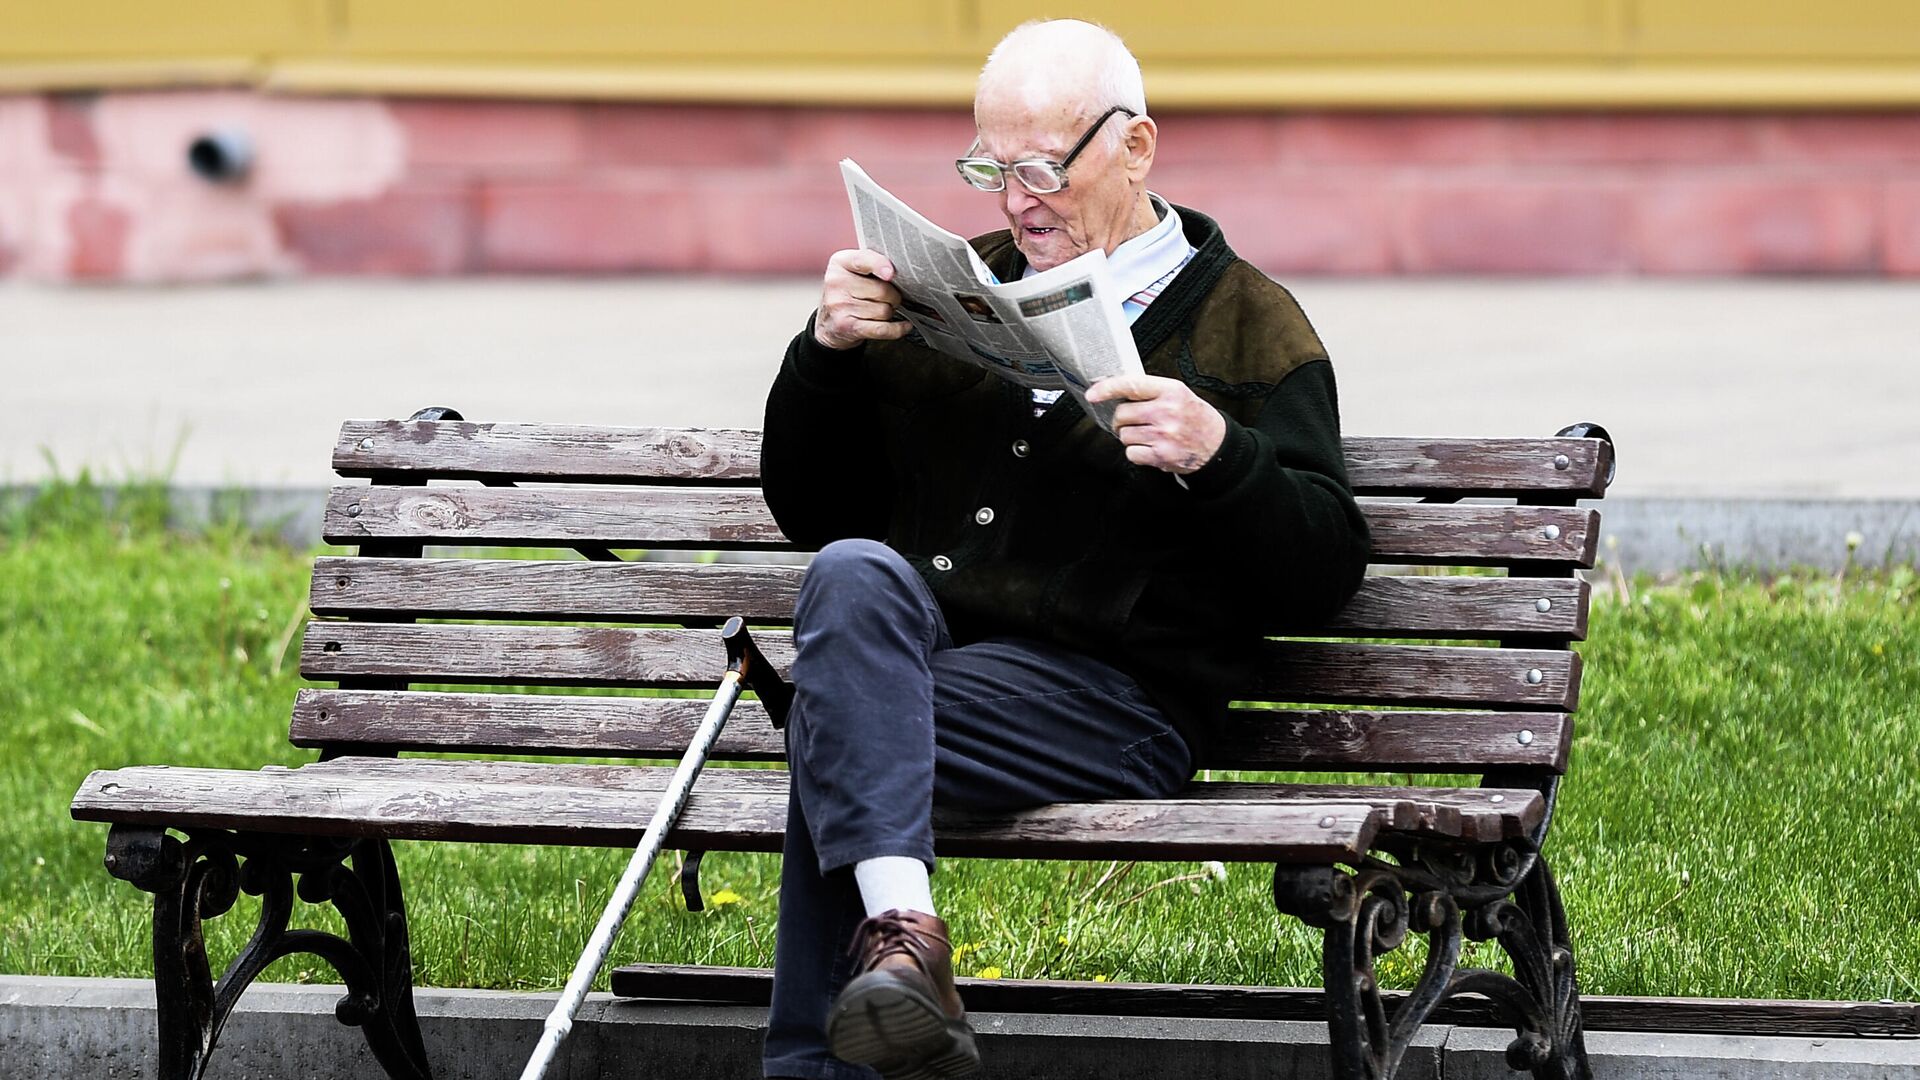 Мужчина читает газету на улице на лавочке в Москве - РИА Новости, 1920, 21.09.2020